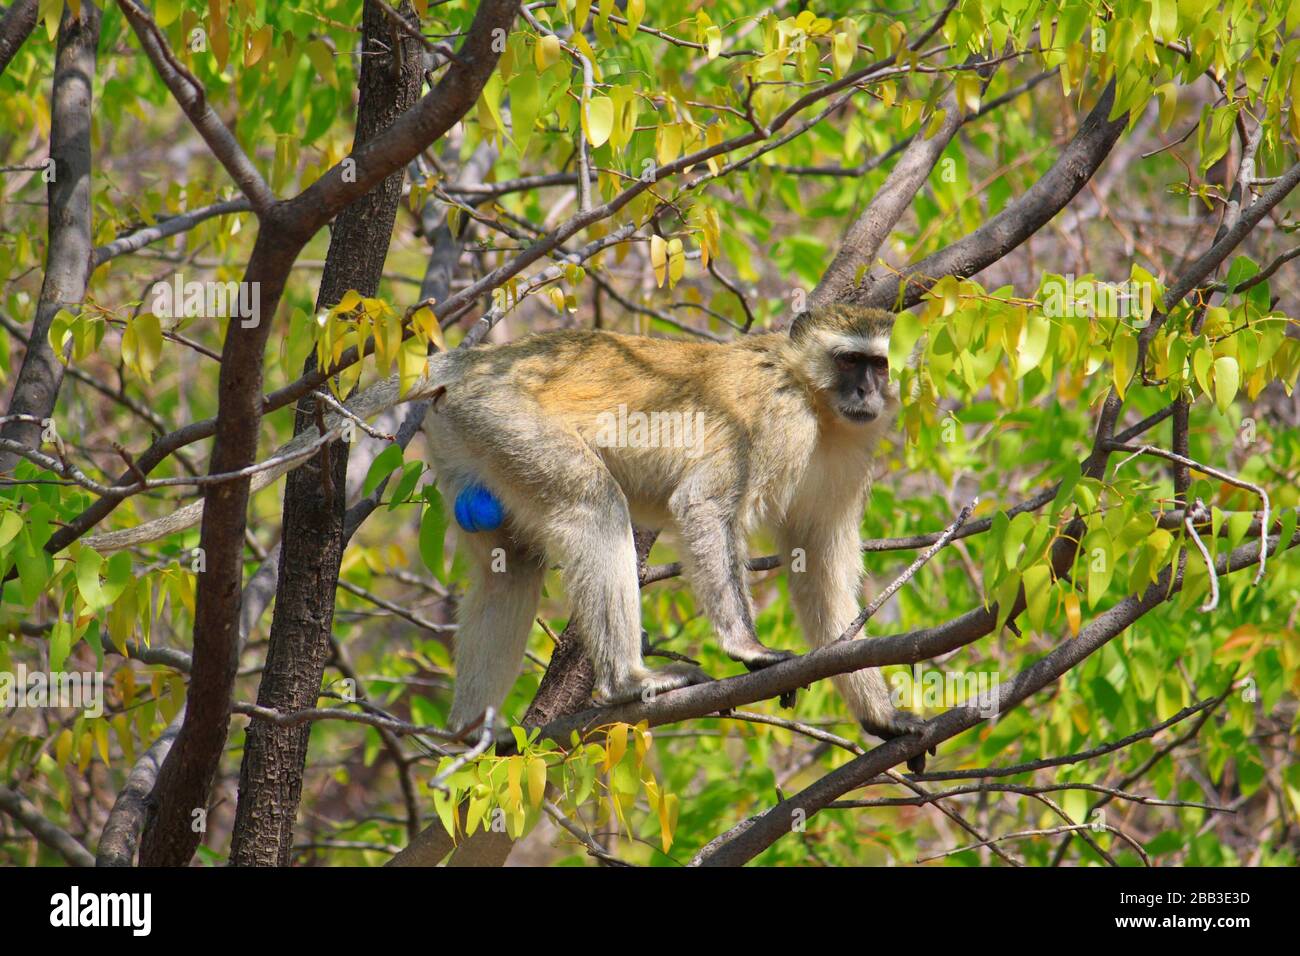 Animals of Africa - Meerkatze mit blauen Hoden Stock Photo